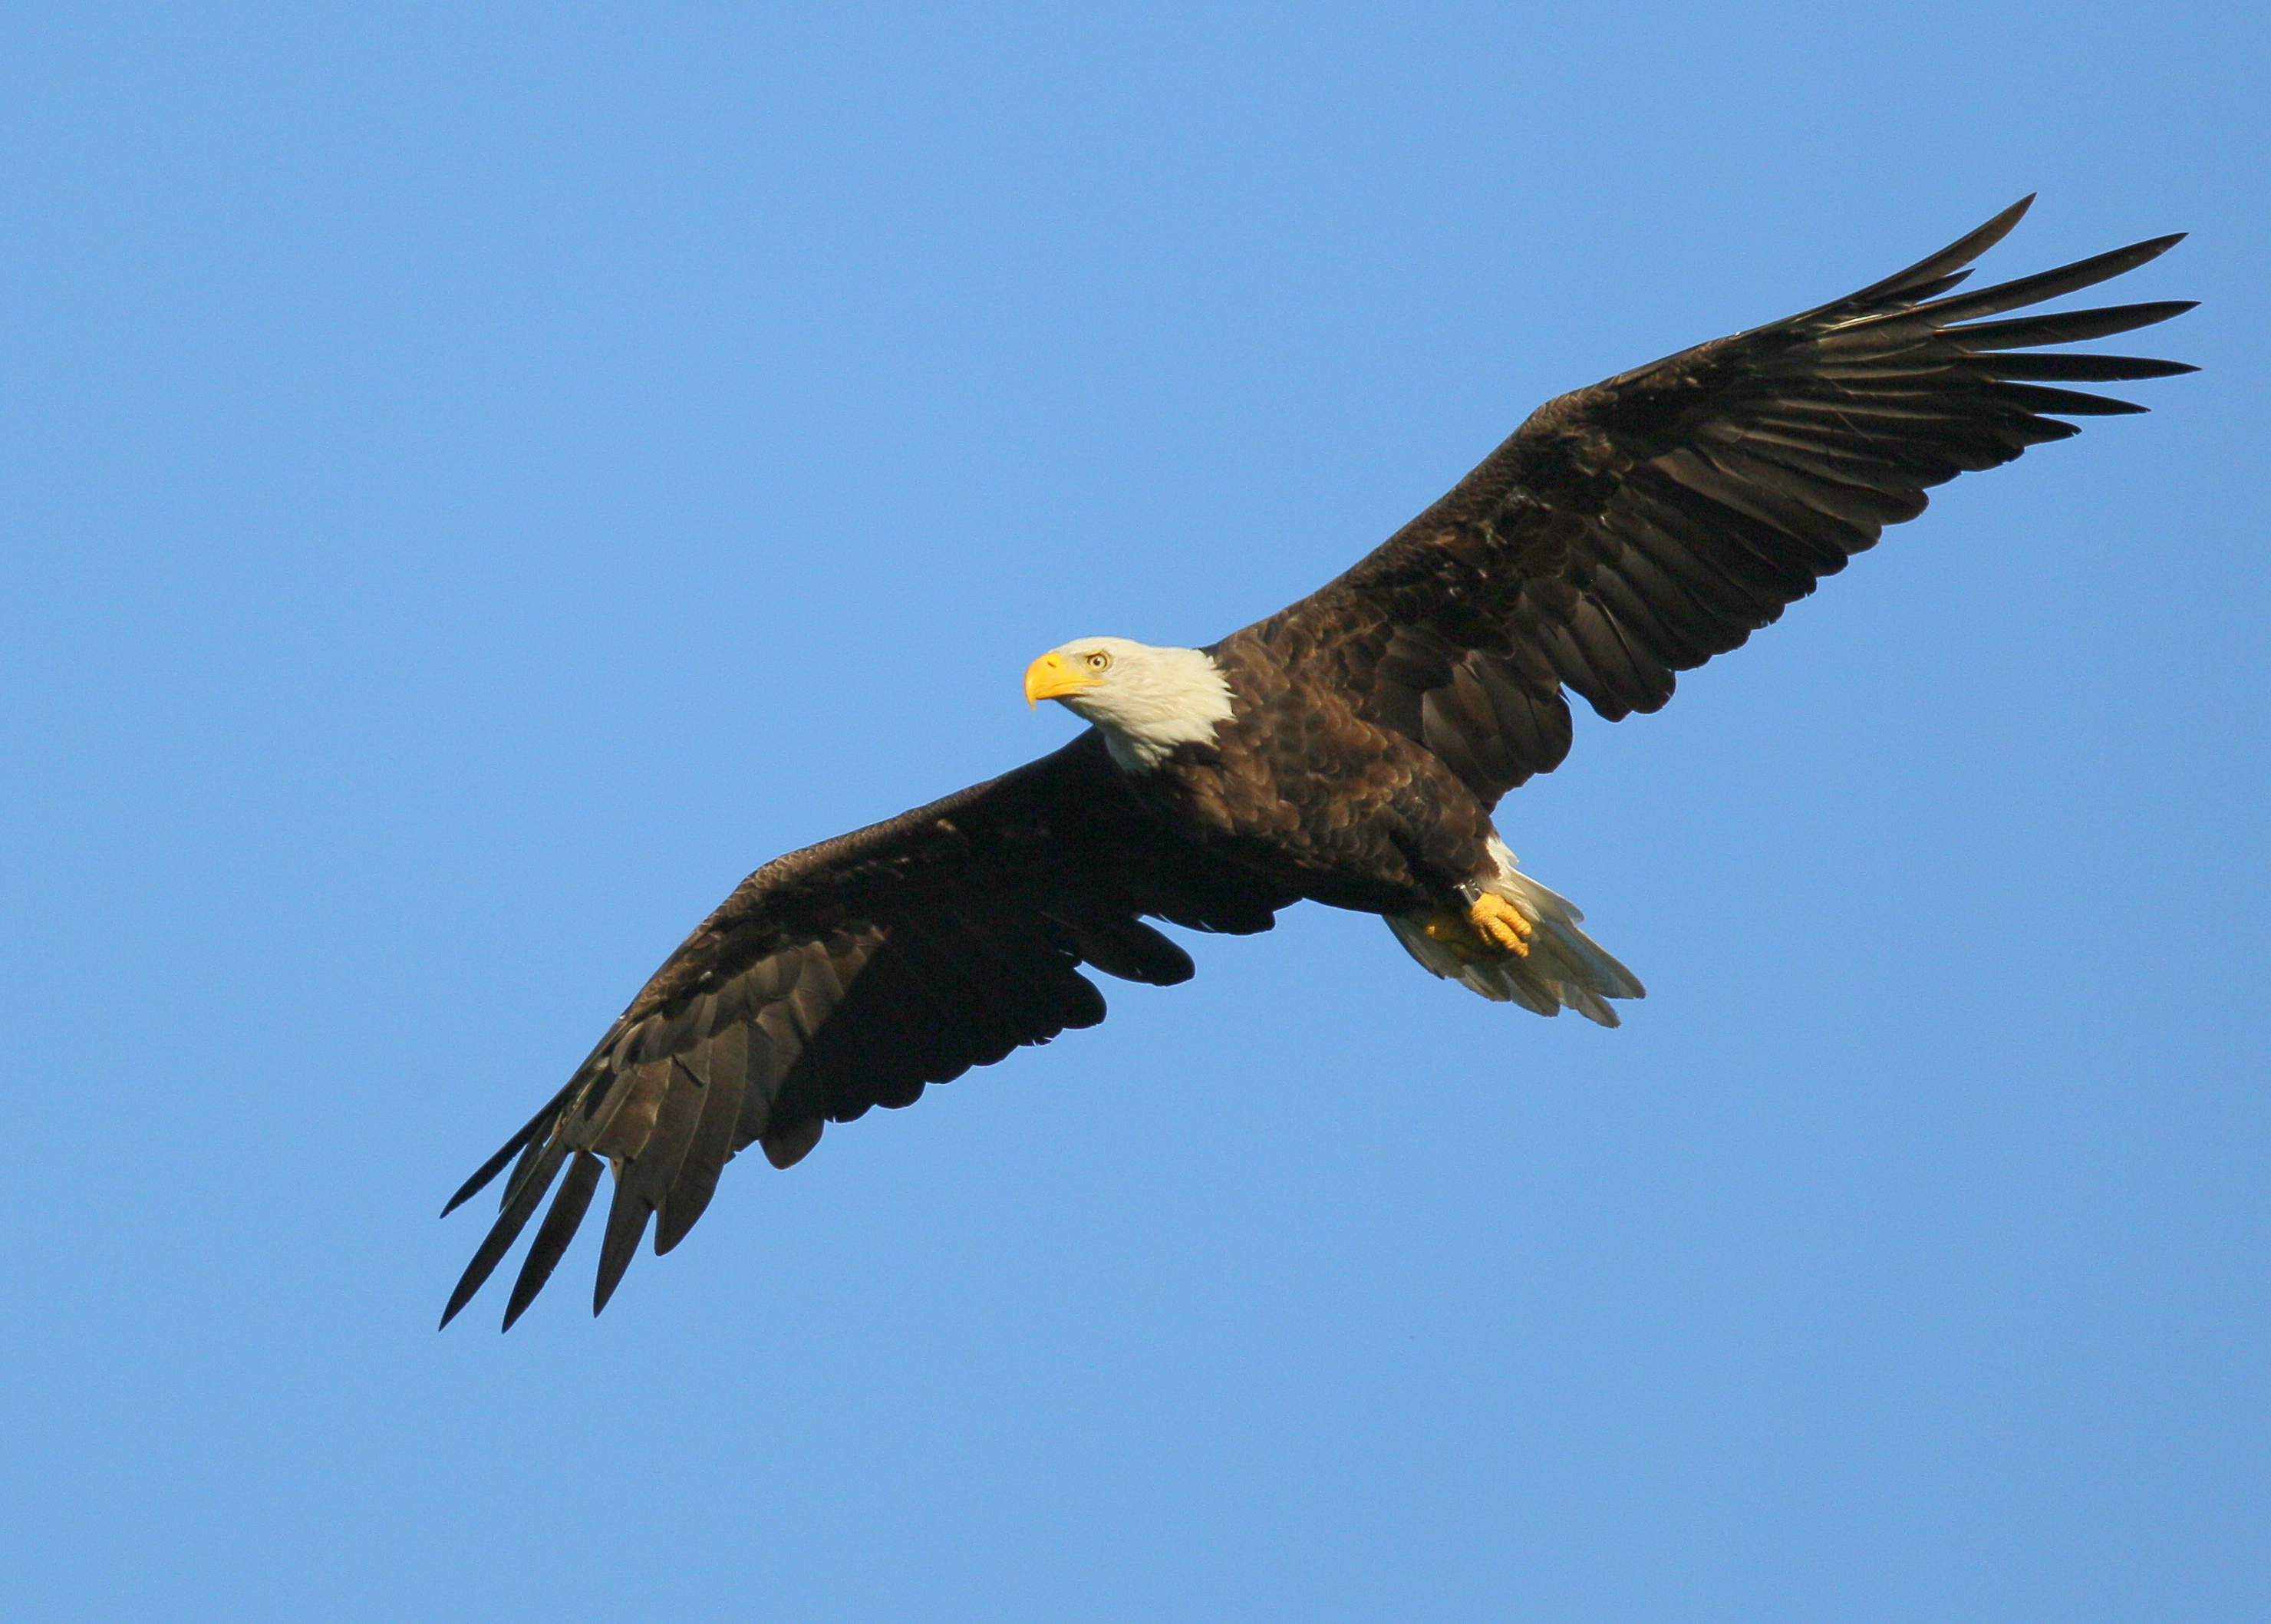 Bald Eagle adult in flight mode around nest